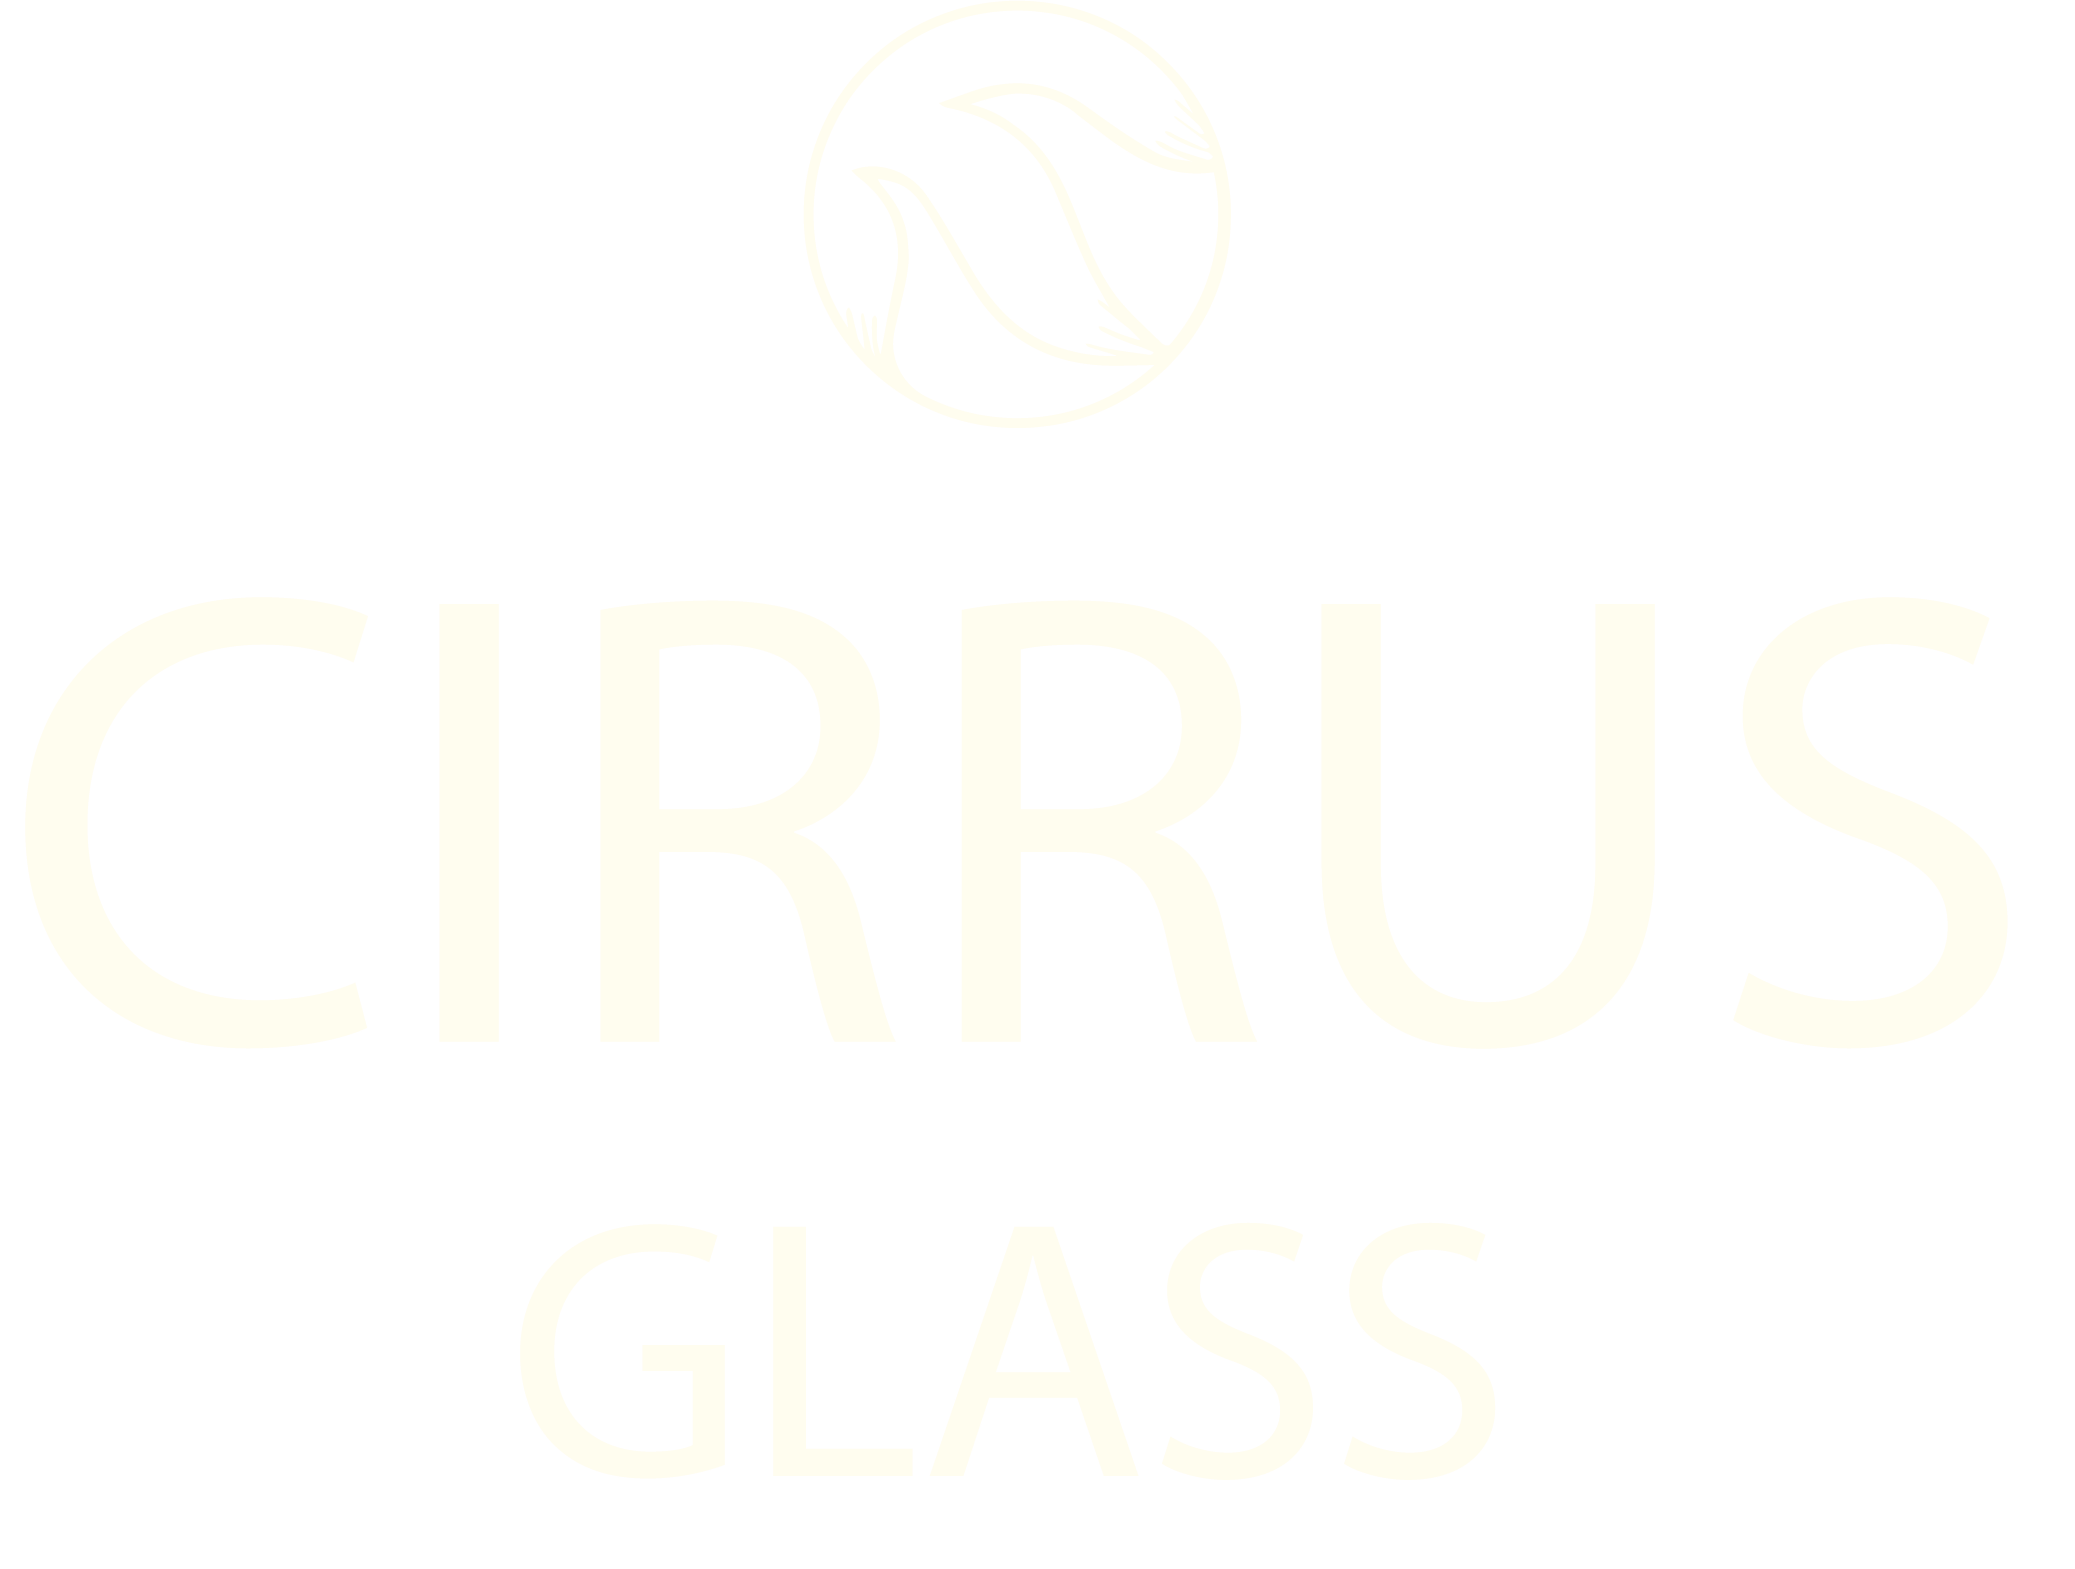 Cirrus Glass Wholesale